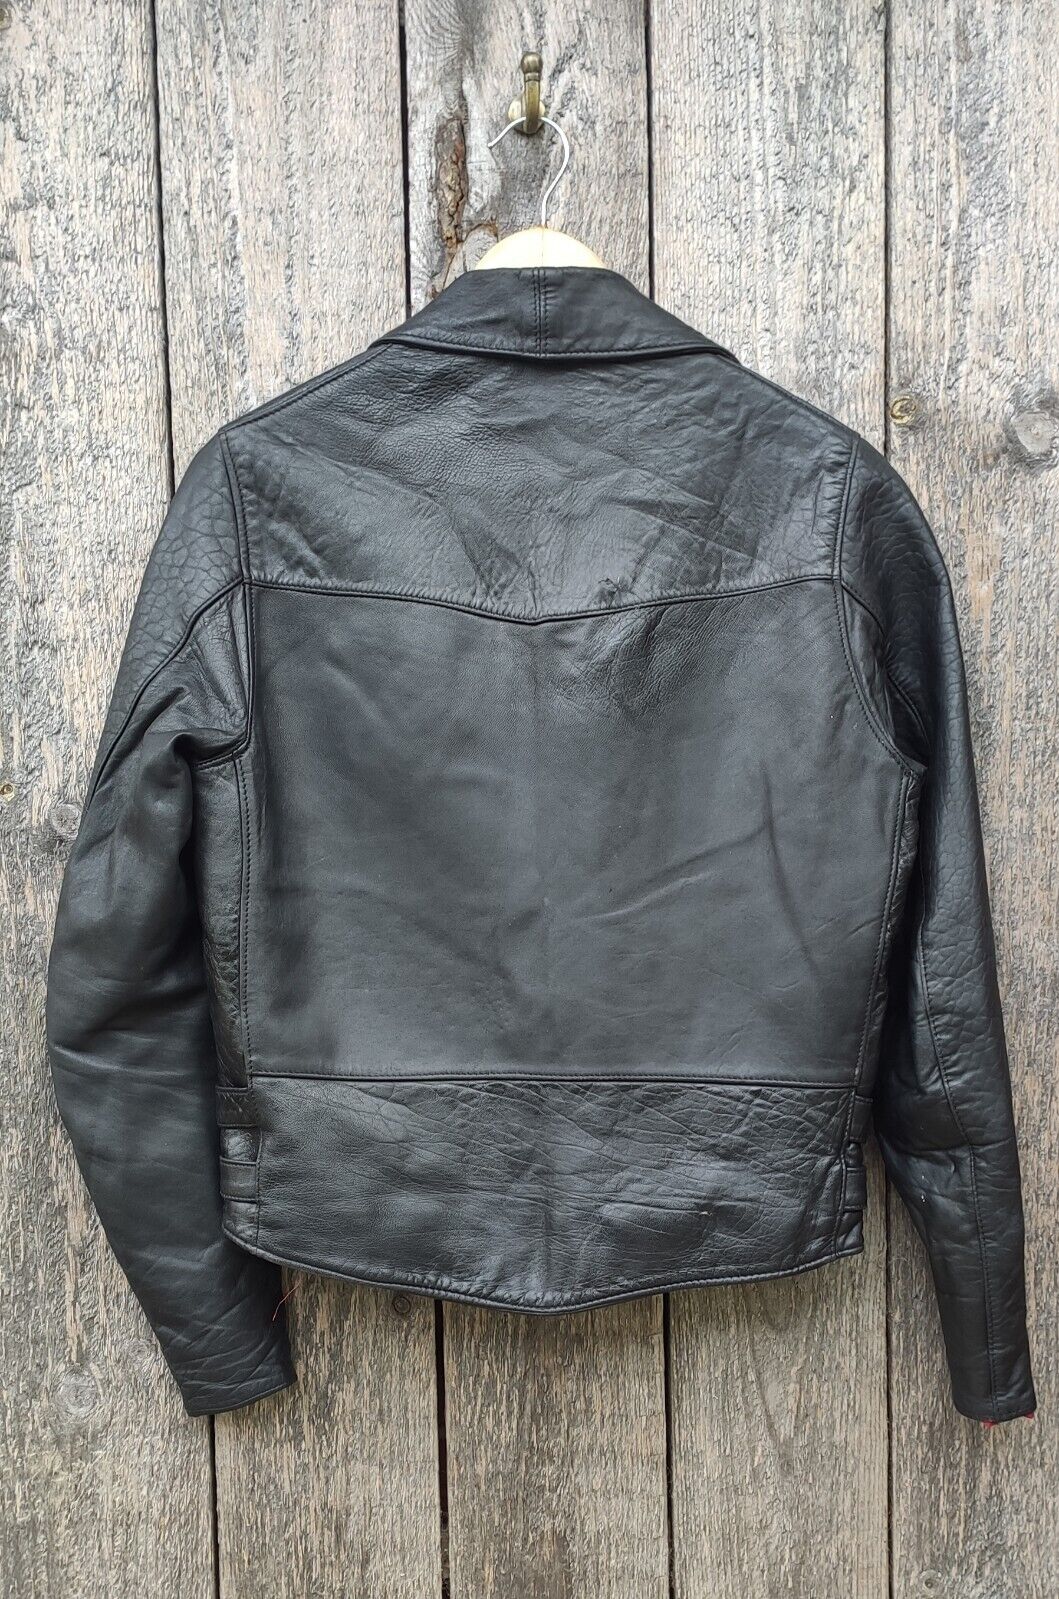 Image of Vintage TT Leathers Motorcycle Jacket Size Small(36") Biker/Classic/Retro/Rocker